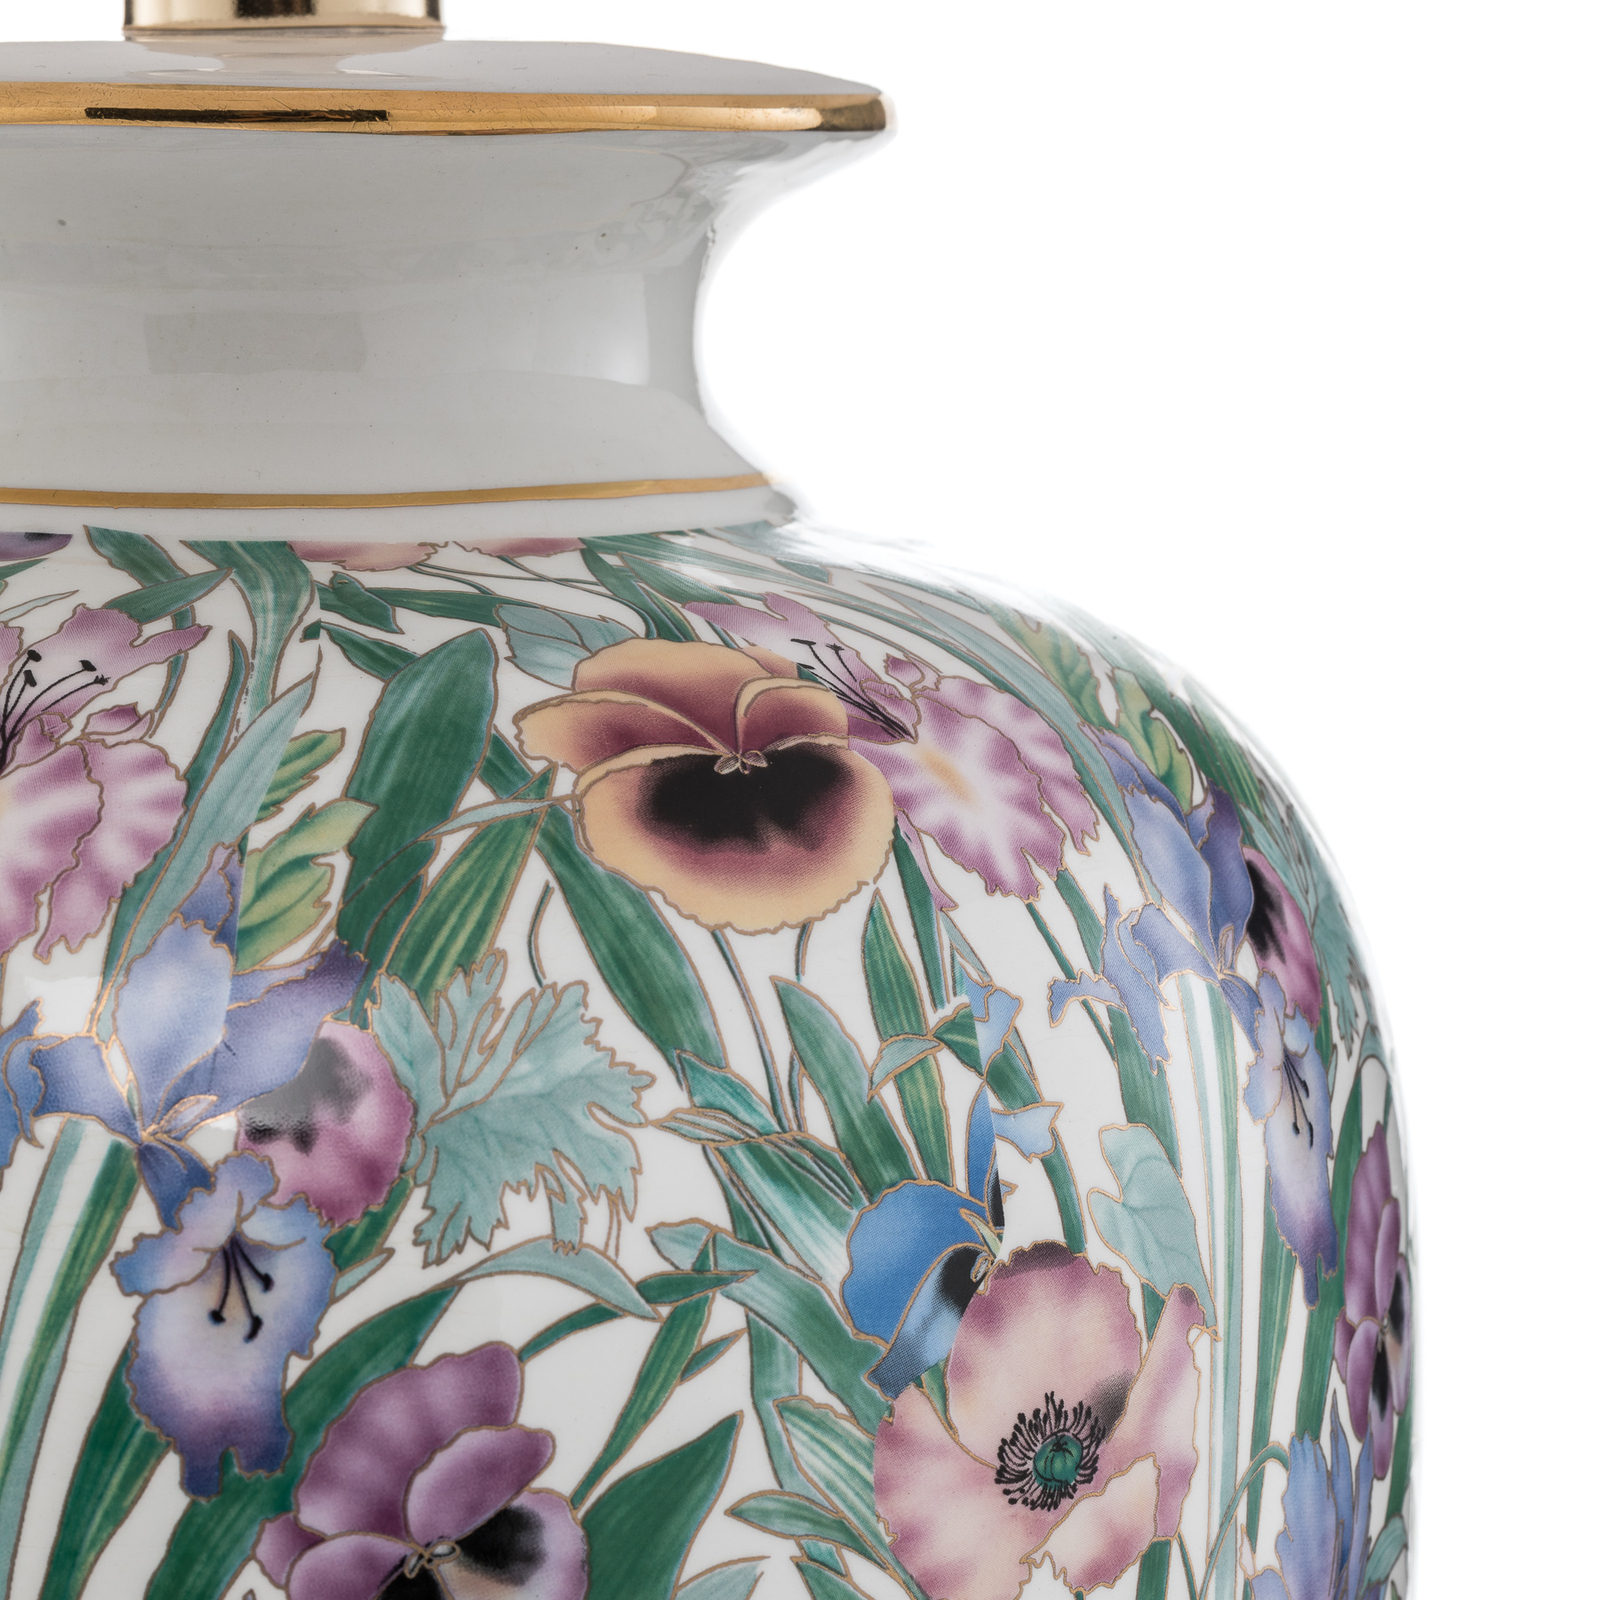 KOLARZ Giardino Panse - floral table lamp, 50 cm